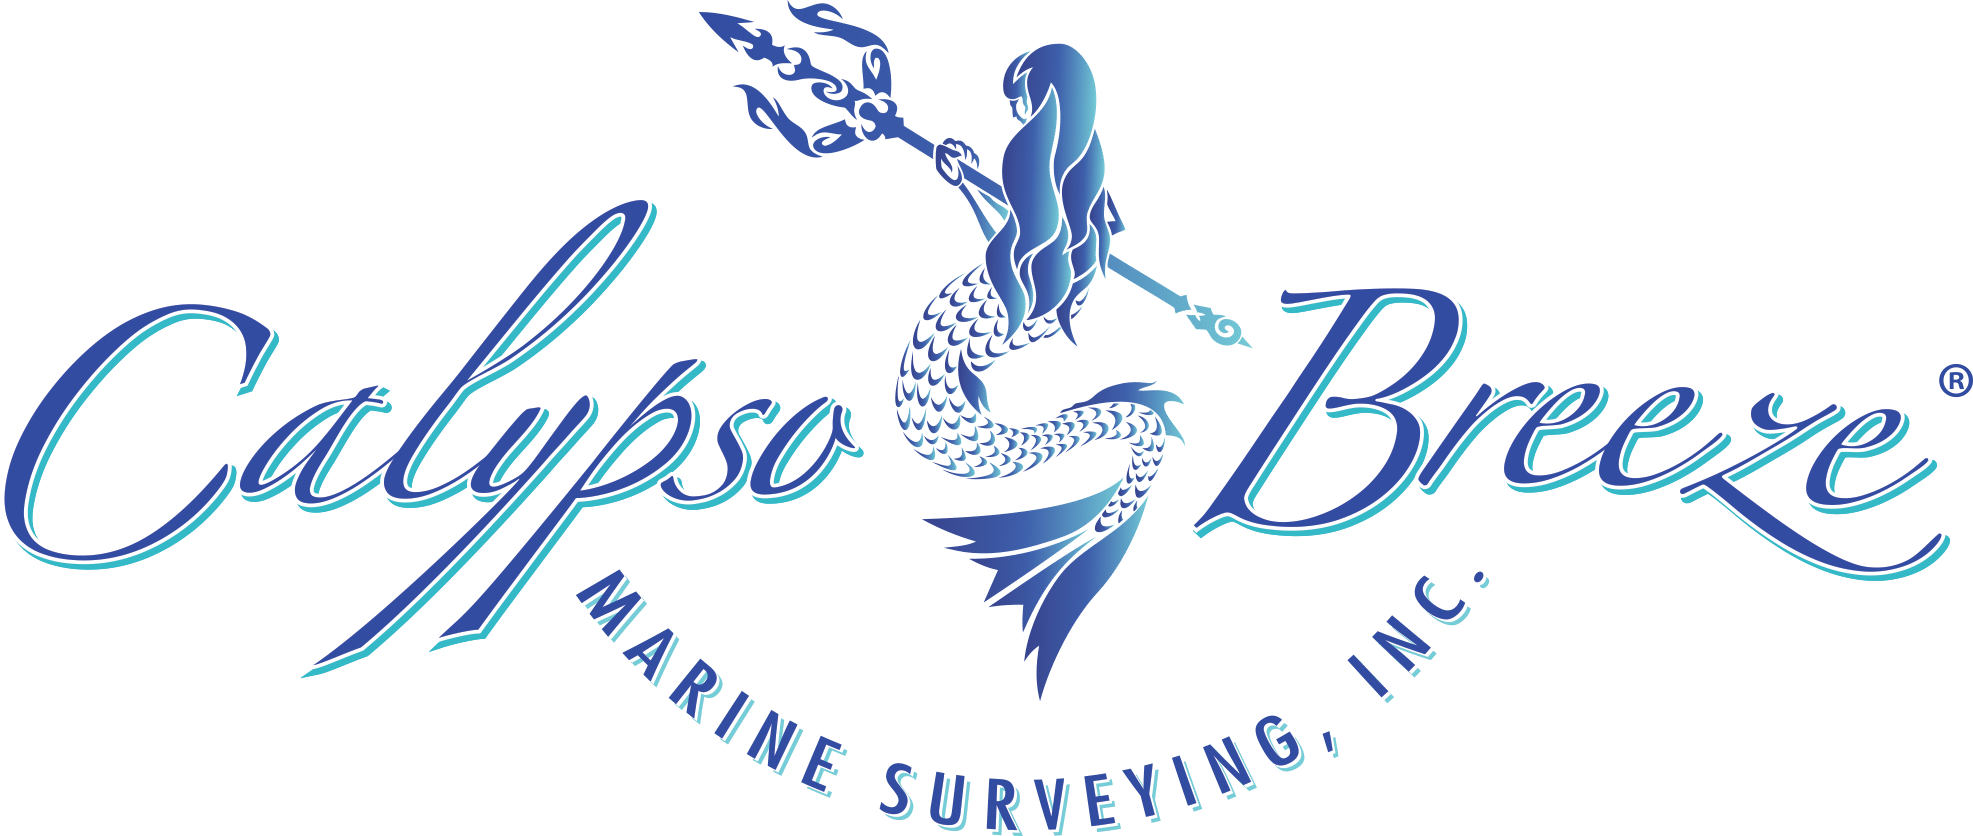 RFR 134 Calypso Breeze Marine Surveying, Inc